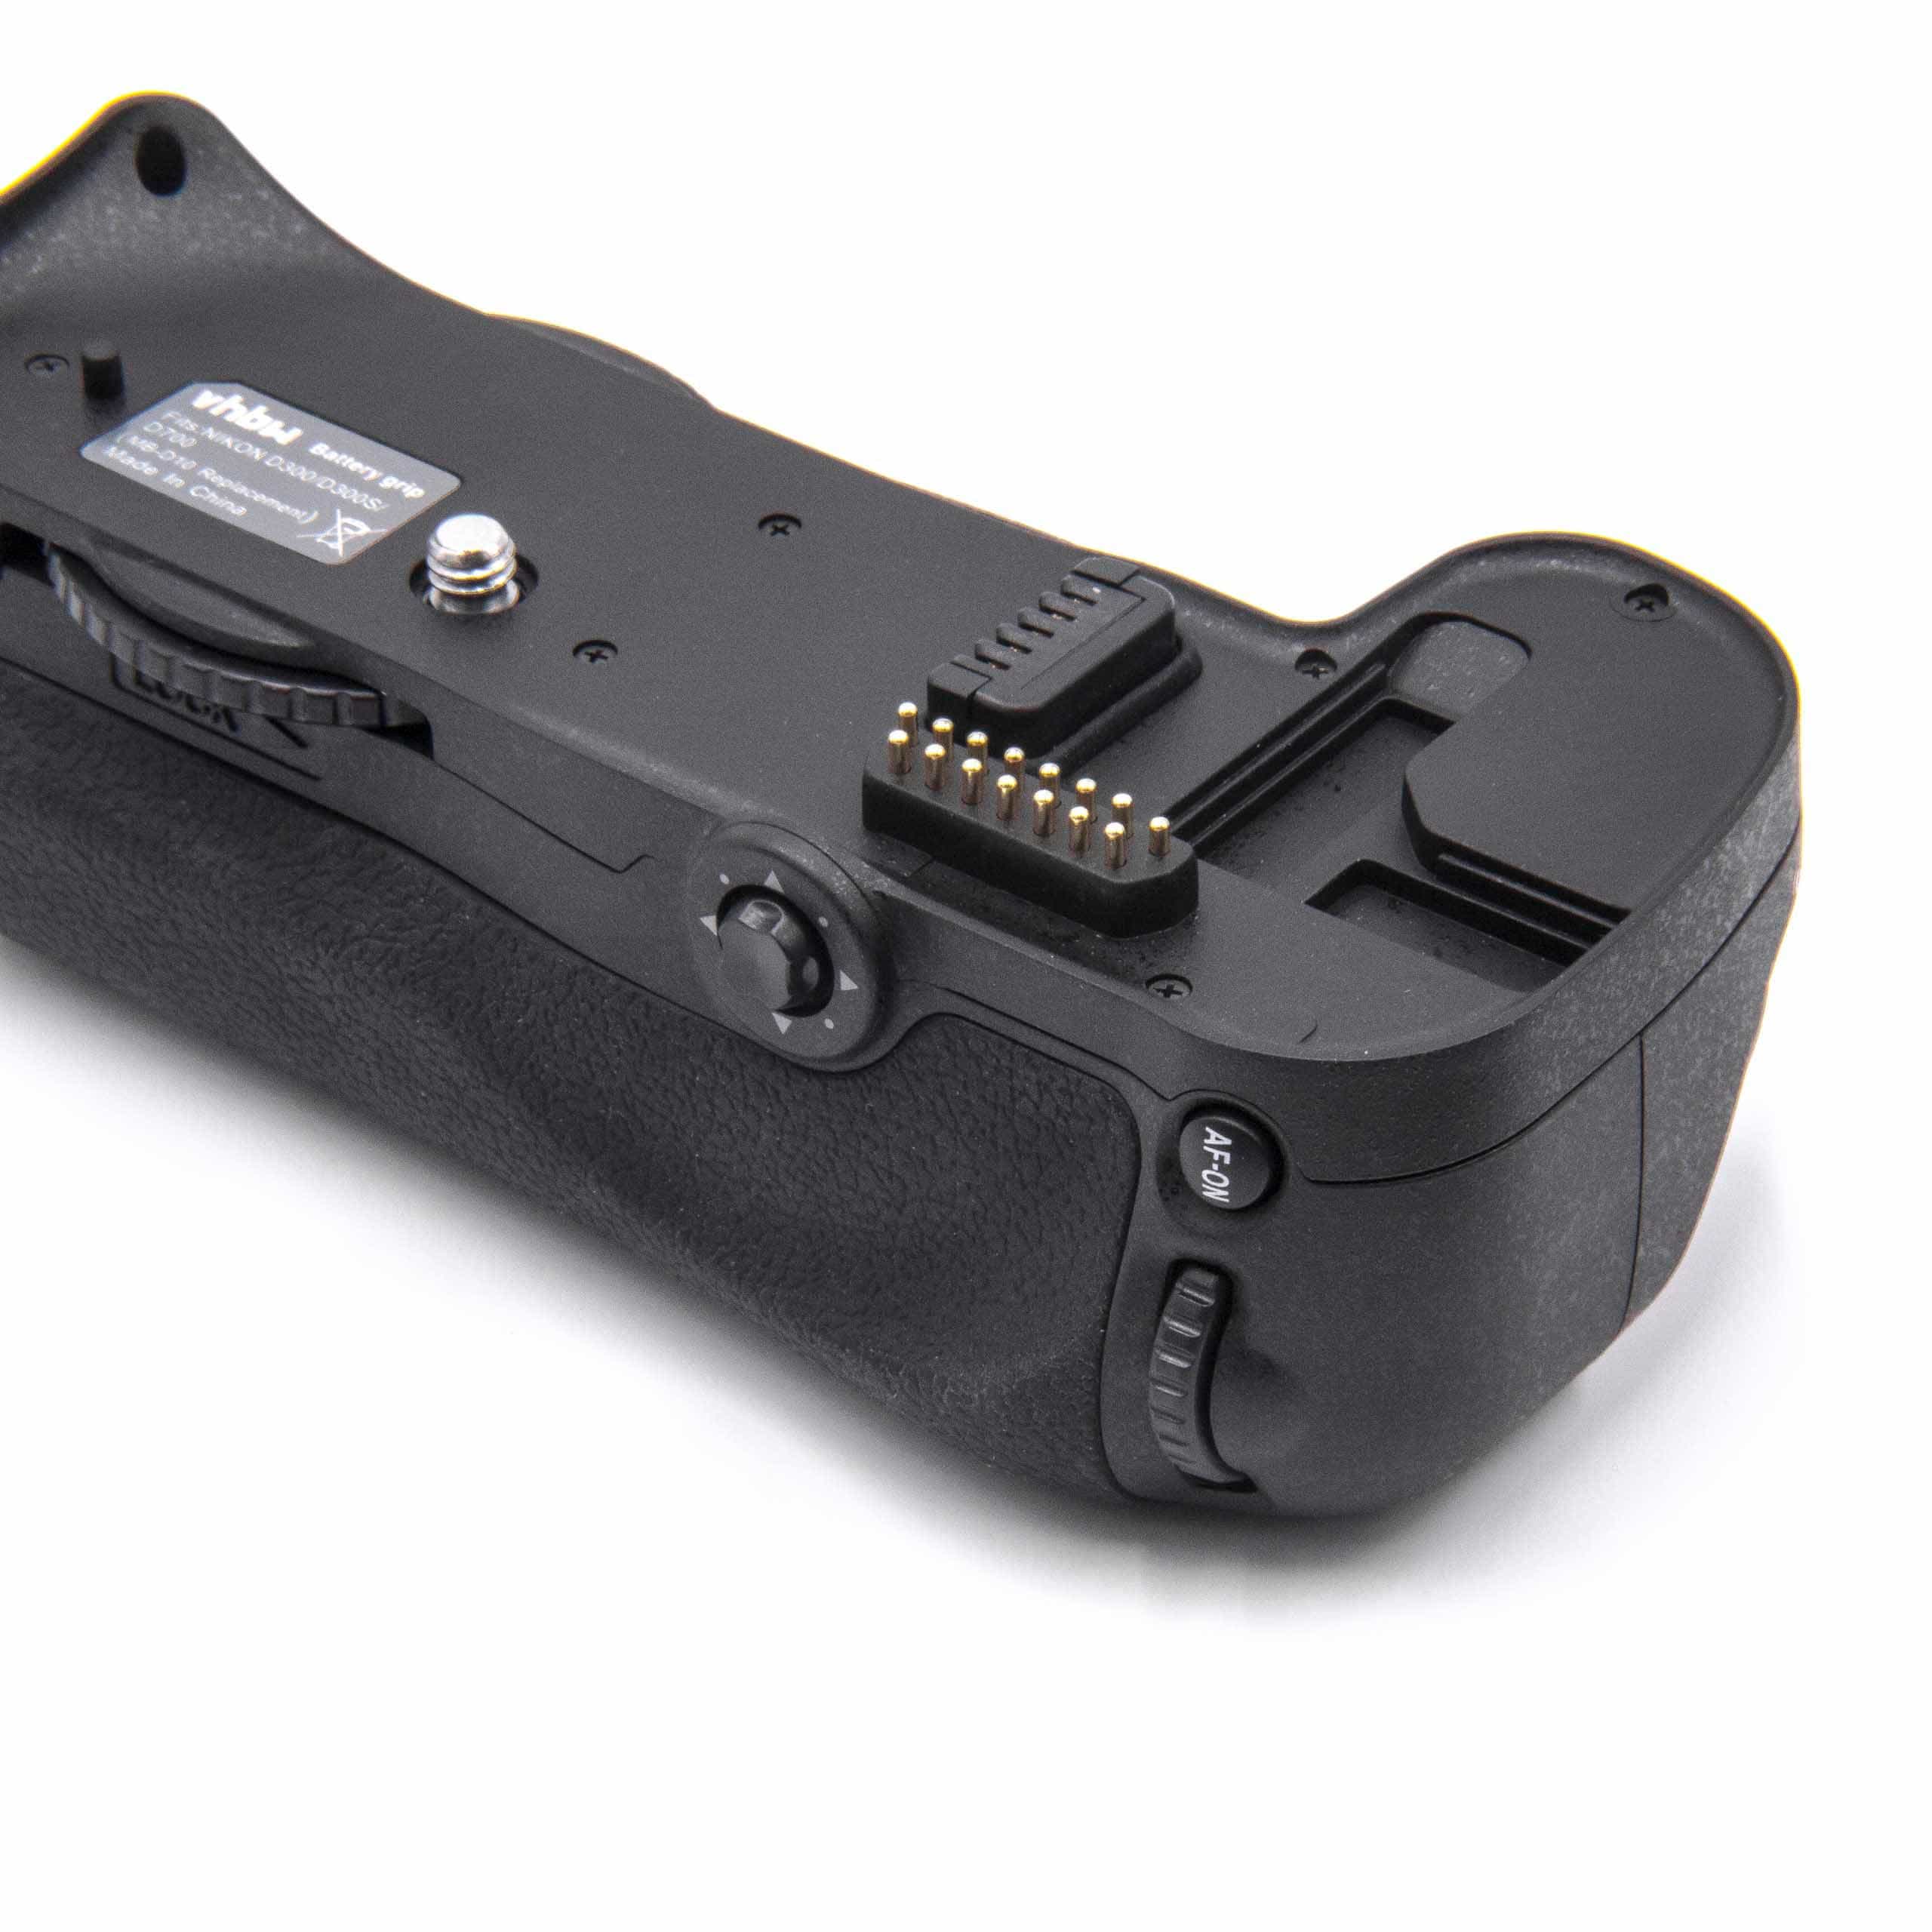 Empuñadura de batería reemplaza Nikon MB-D10 para camara Nikon - incl. rueda selectora